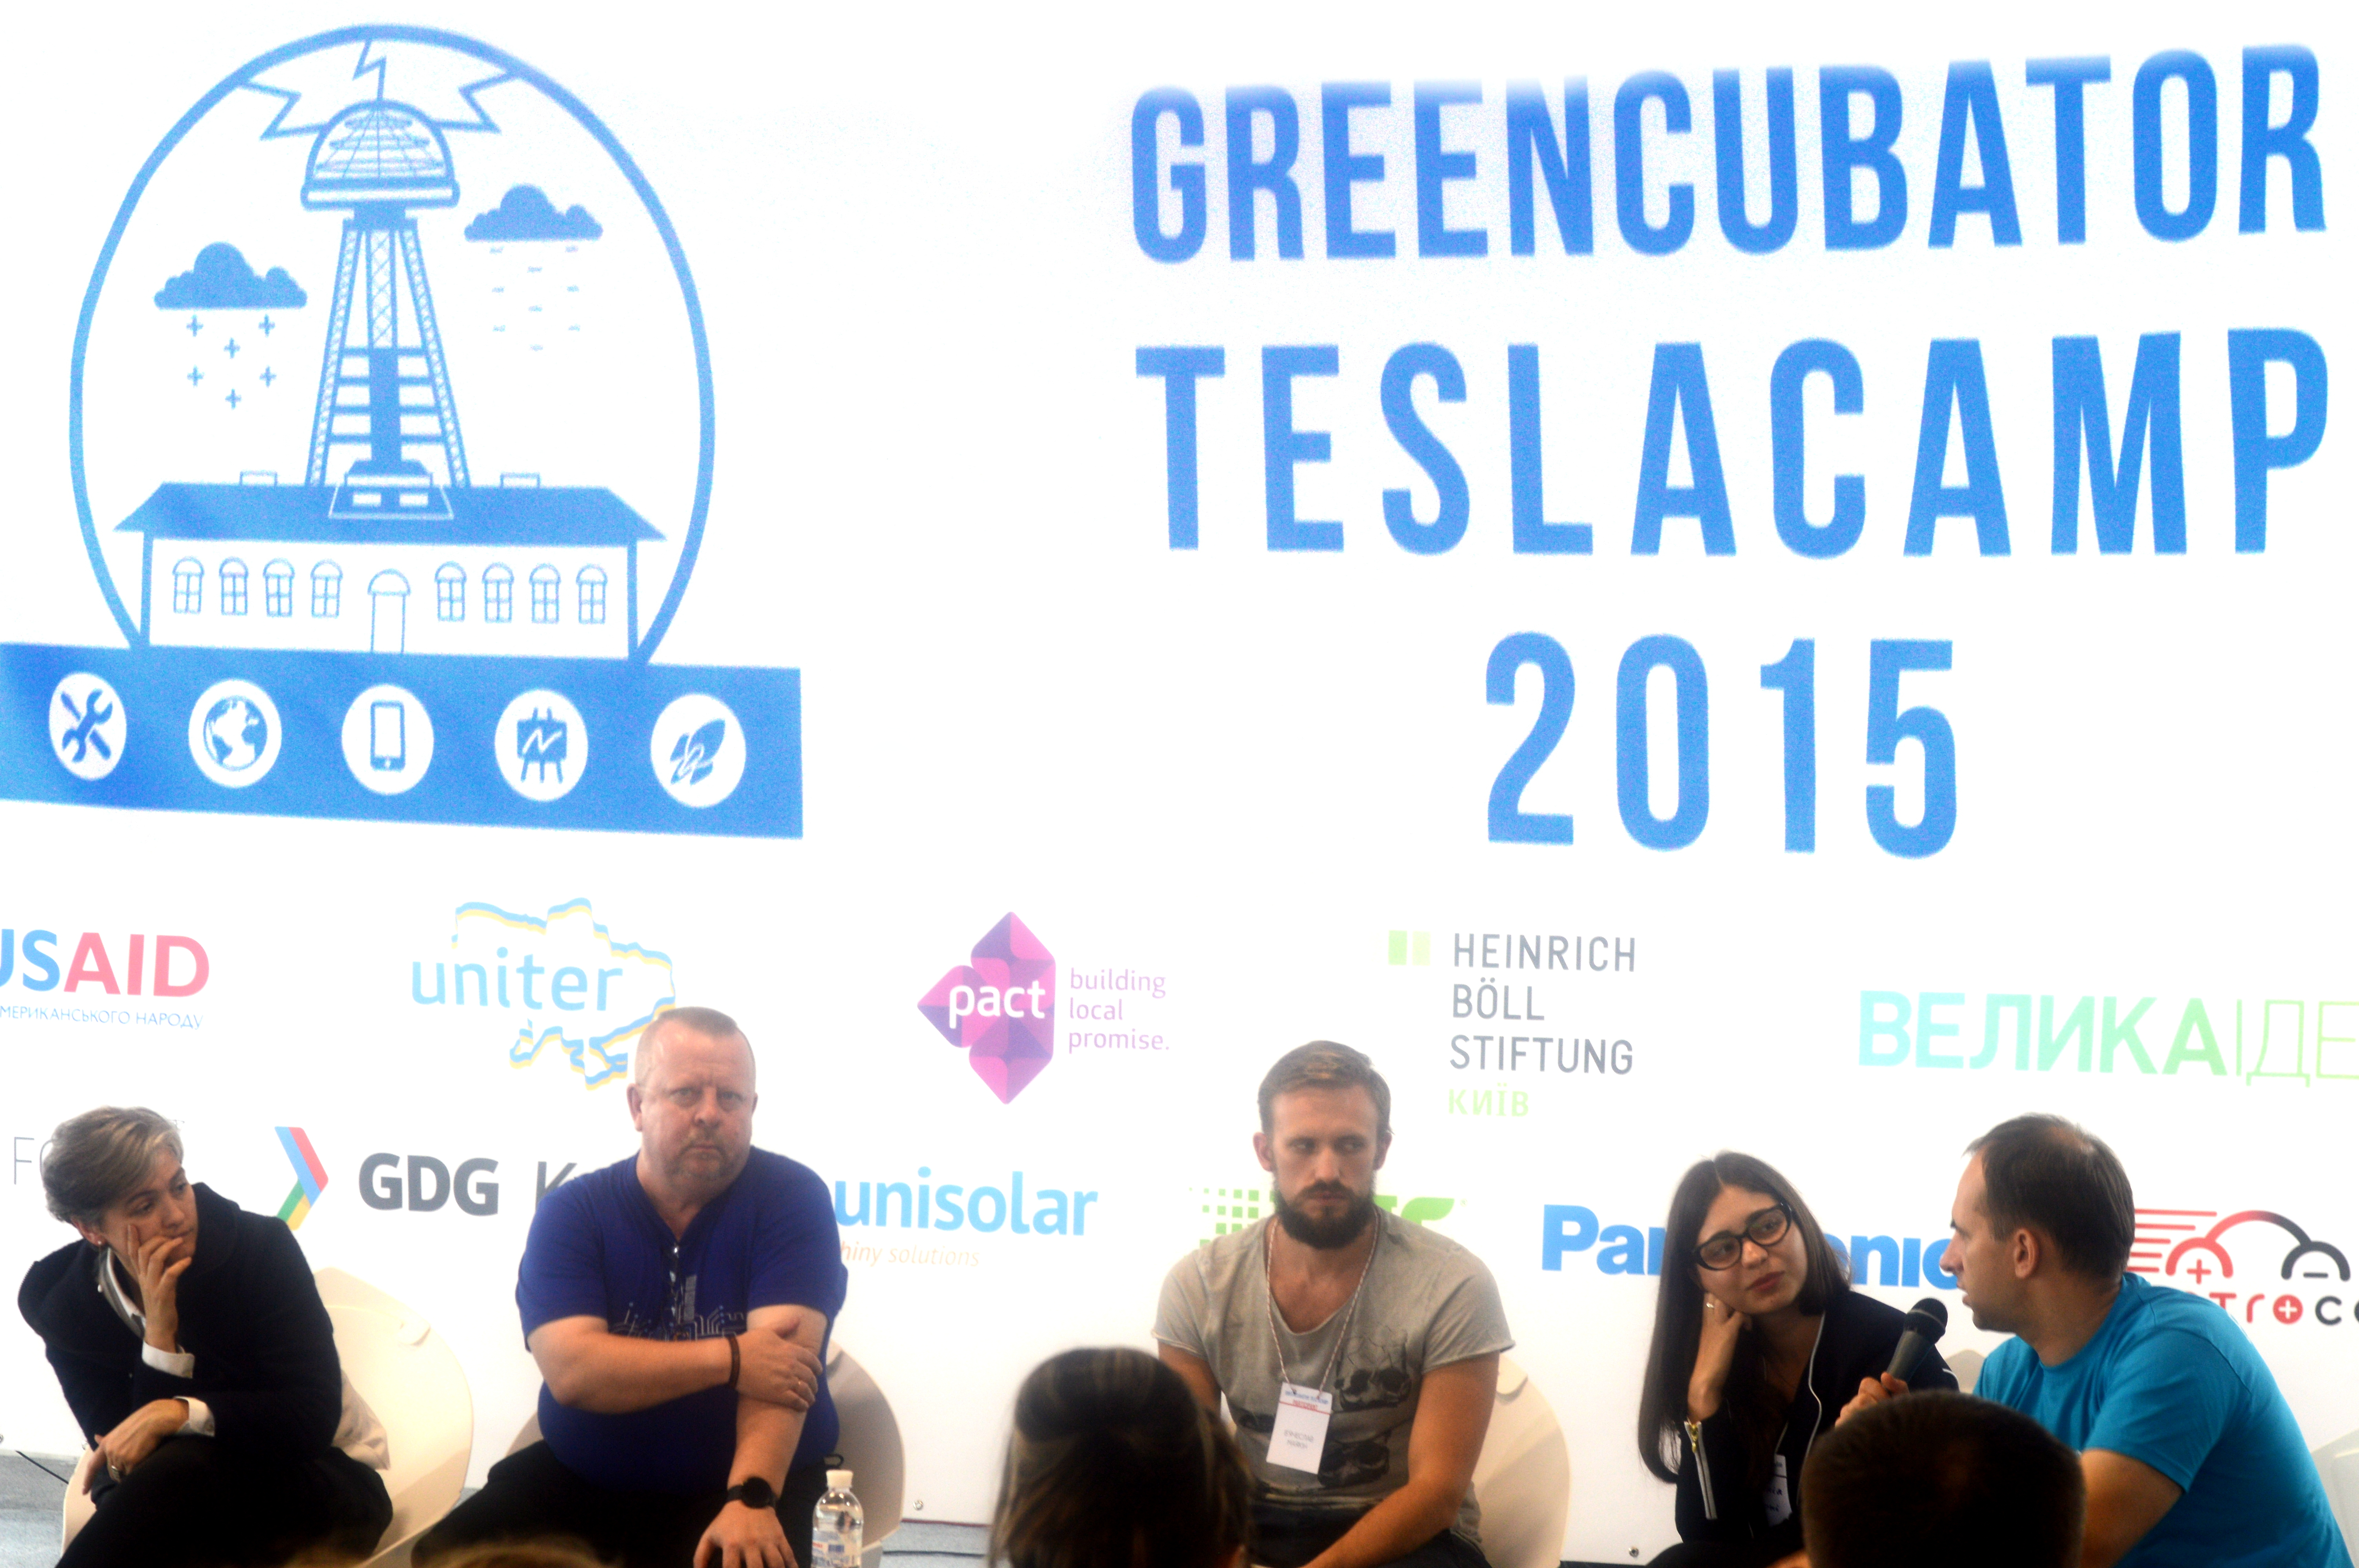 ecoist on Greencubator Teslacamp